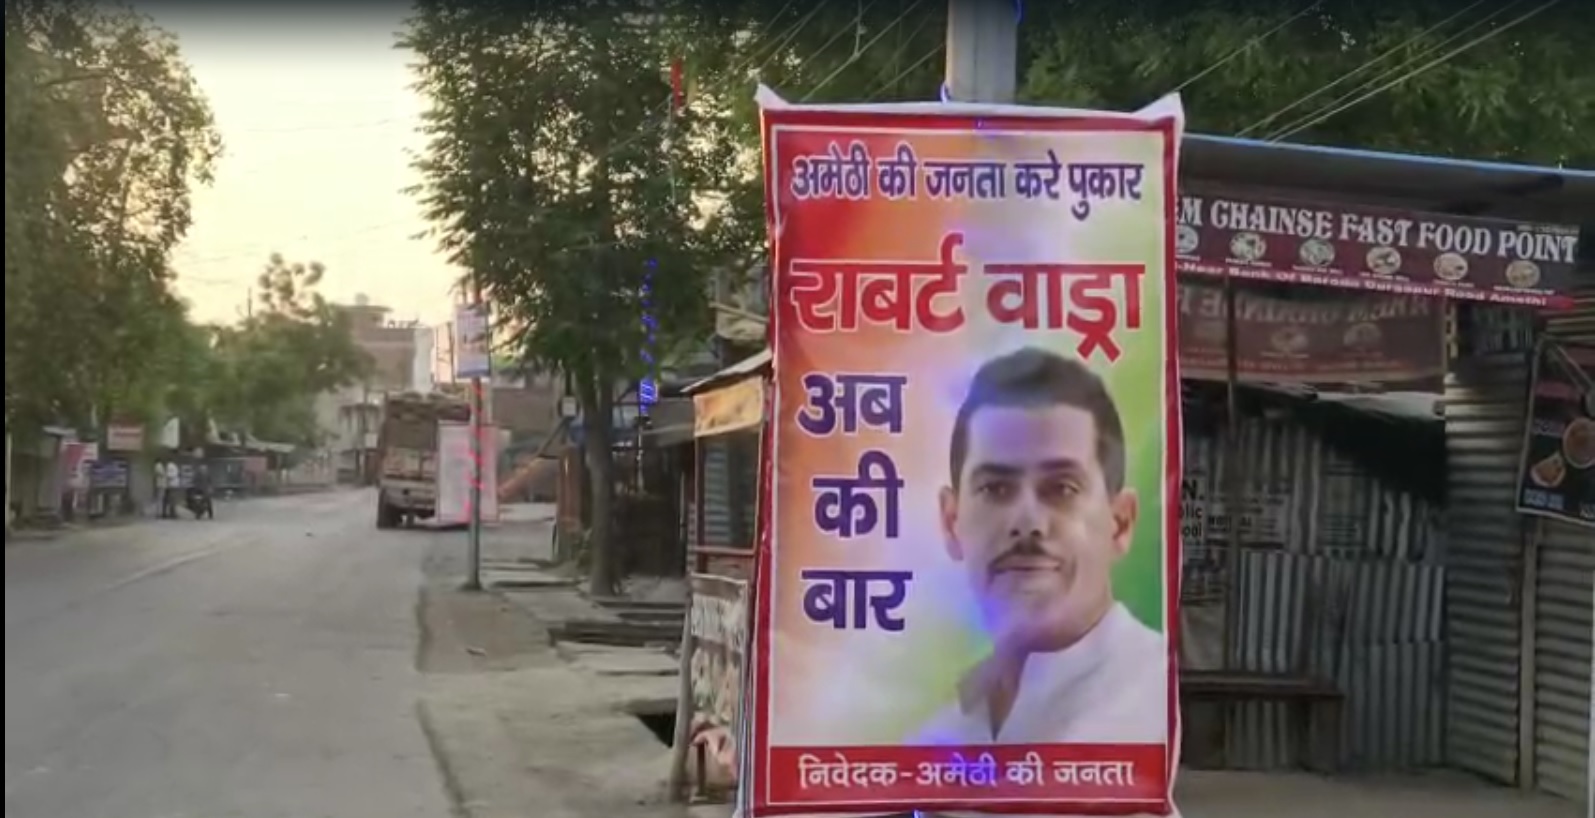 You are currently viewing "Robert Vadra Ab Ki Baar" Posters In Amethi Amid Rahul Gandhi Suspense